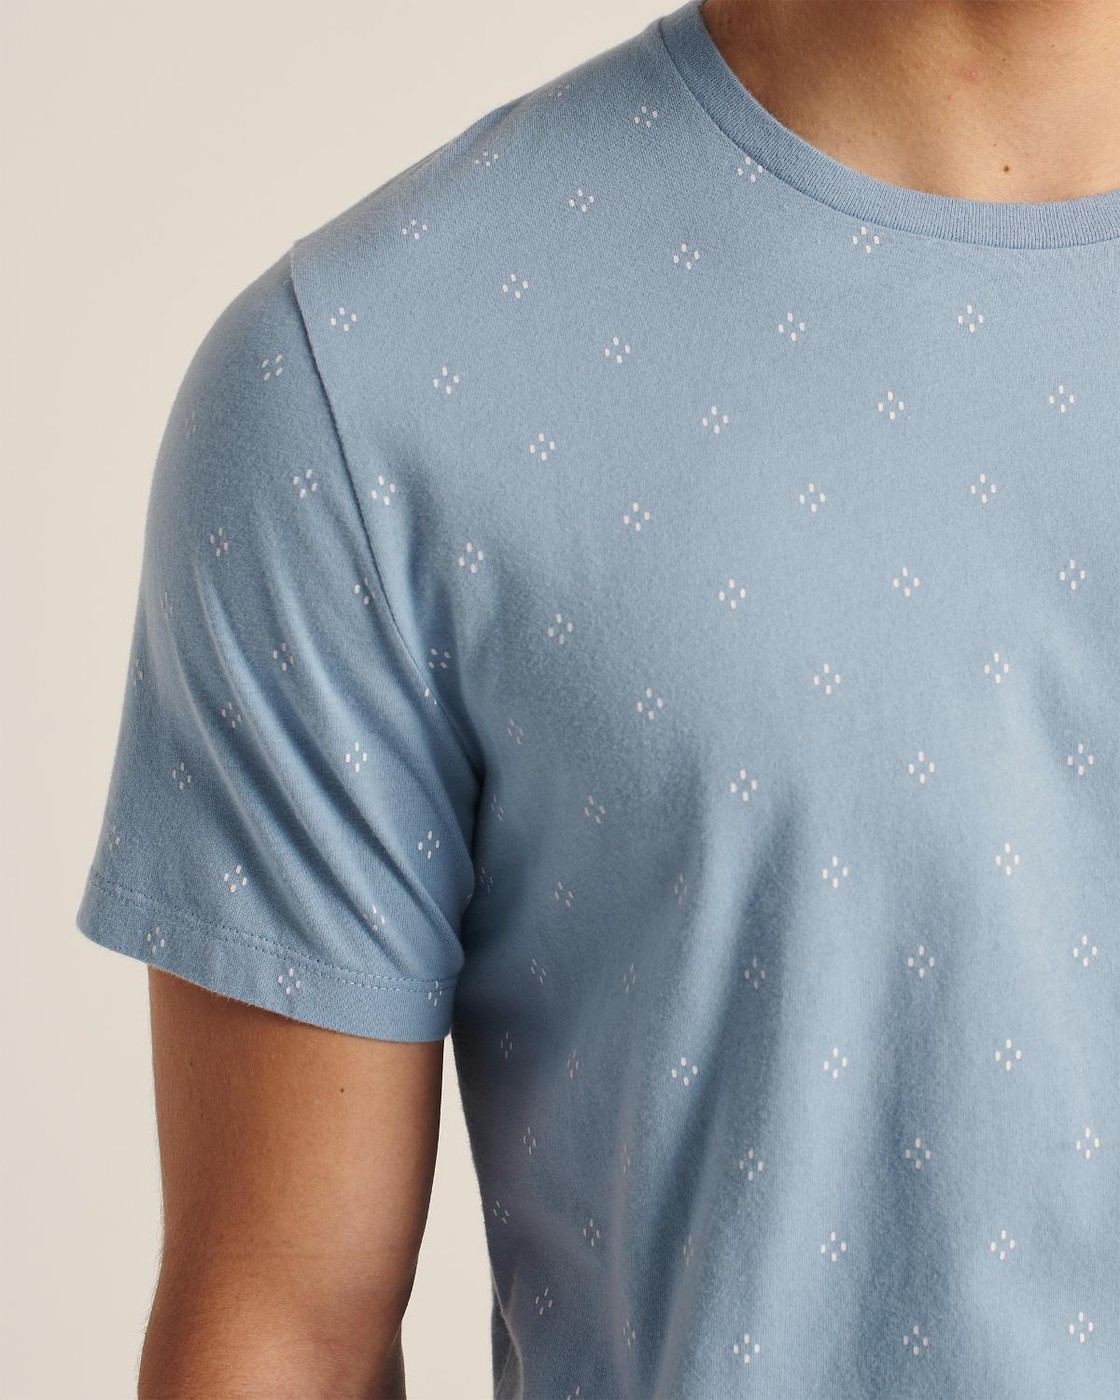 Голубая футболка - мужская футболка Abercrombie & Fitch